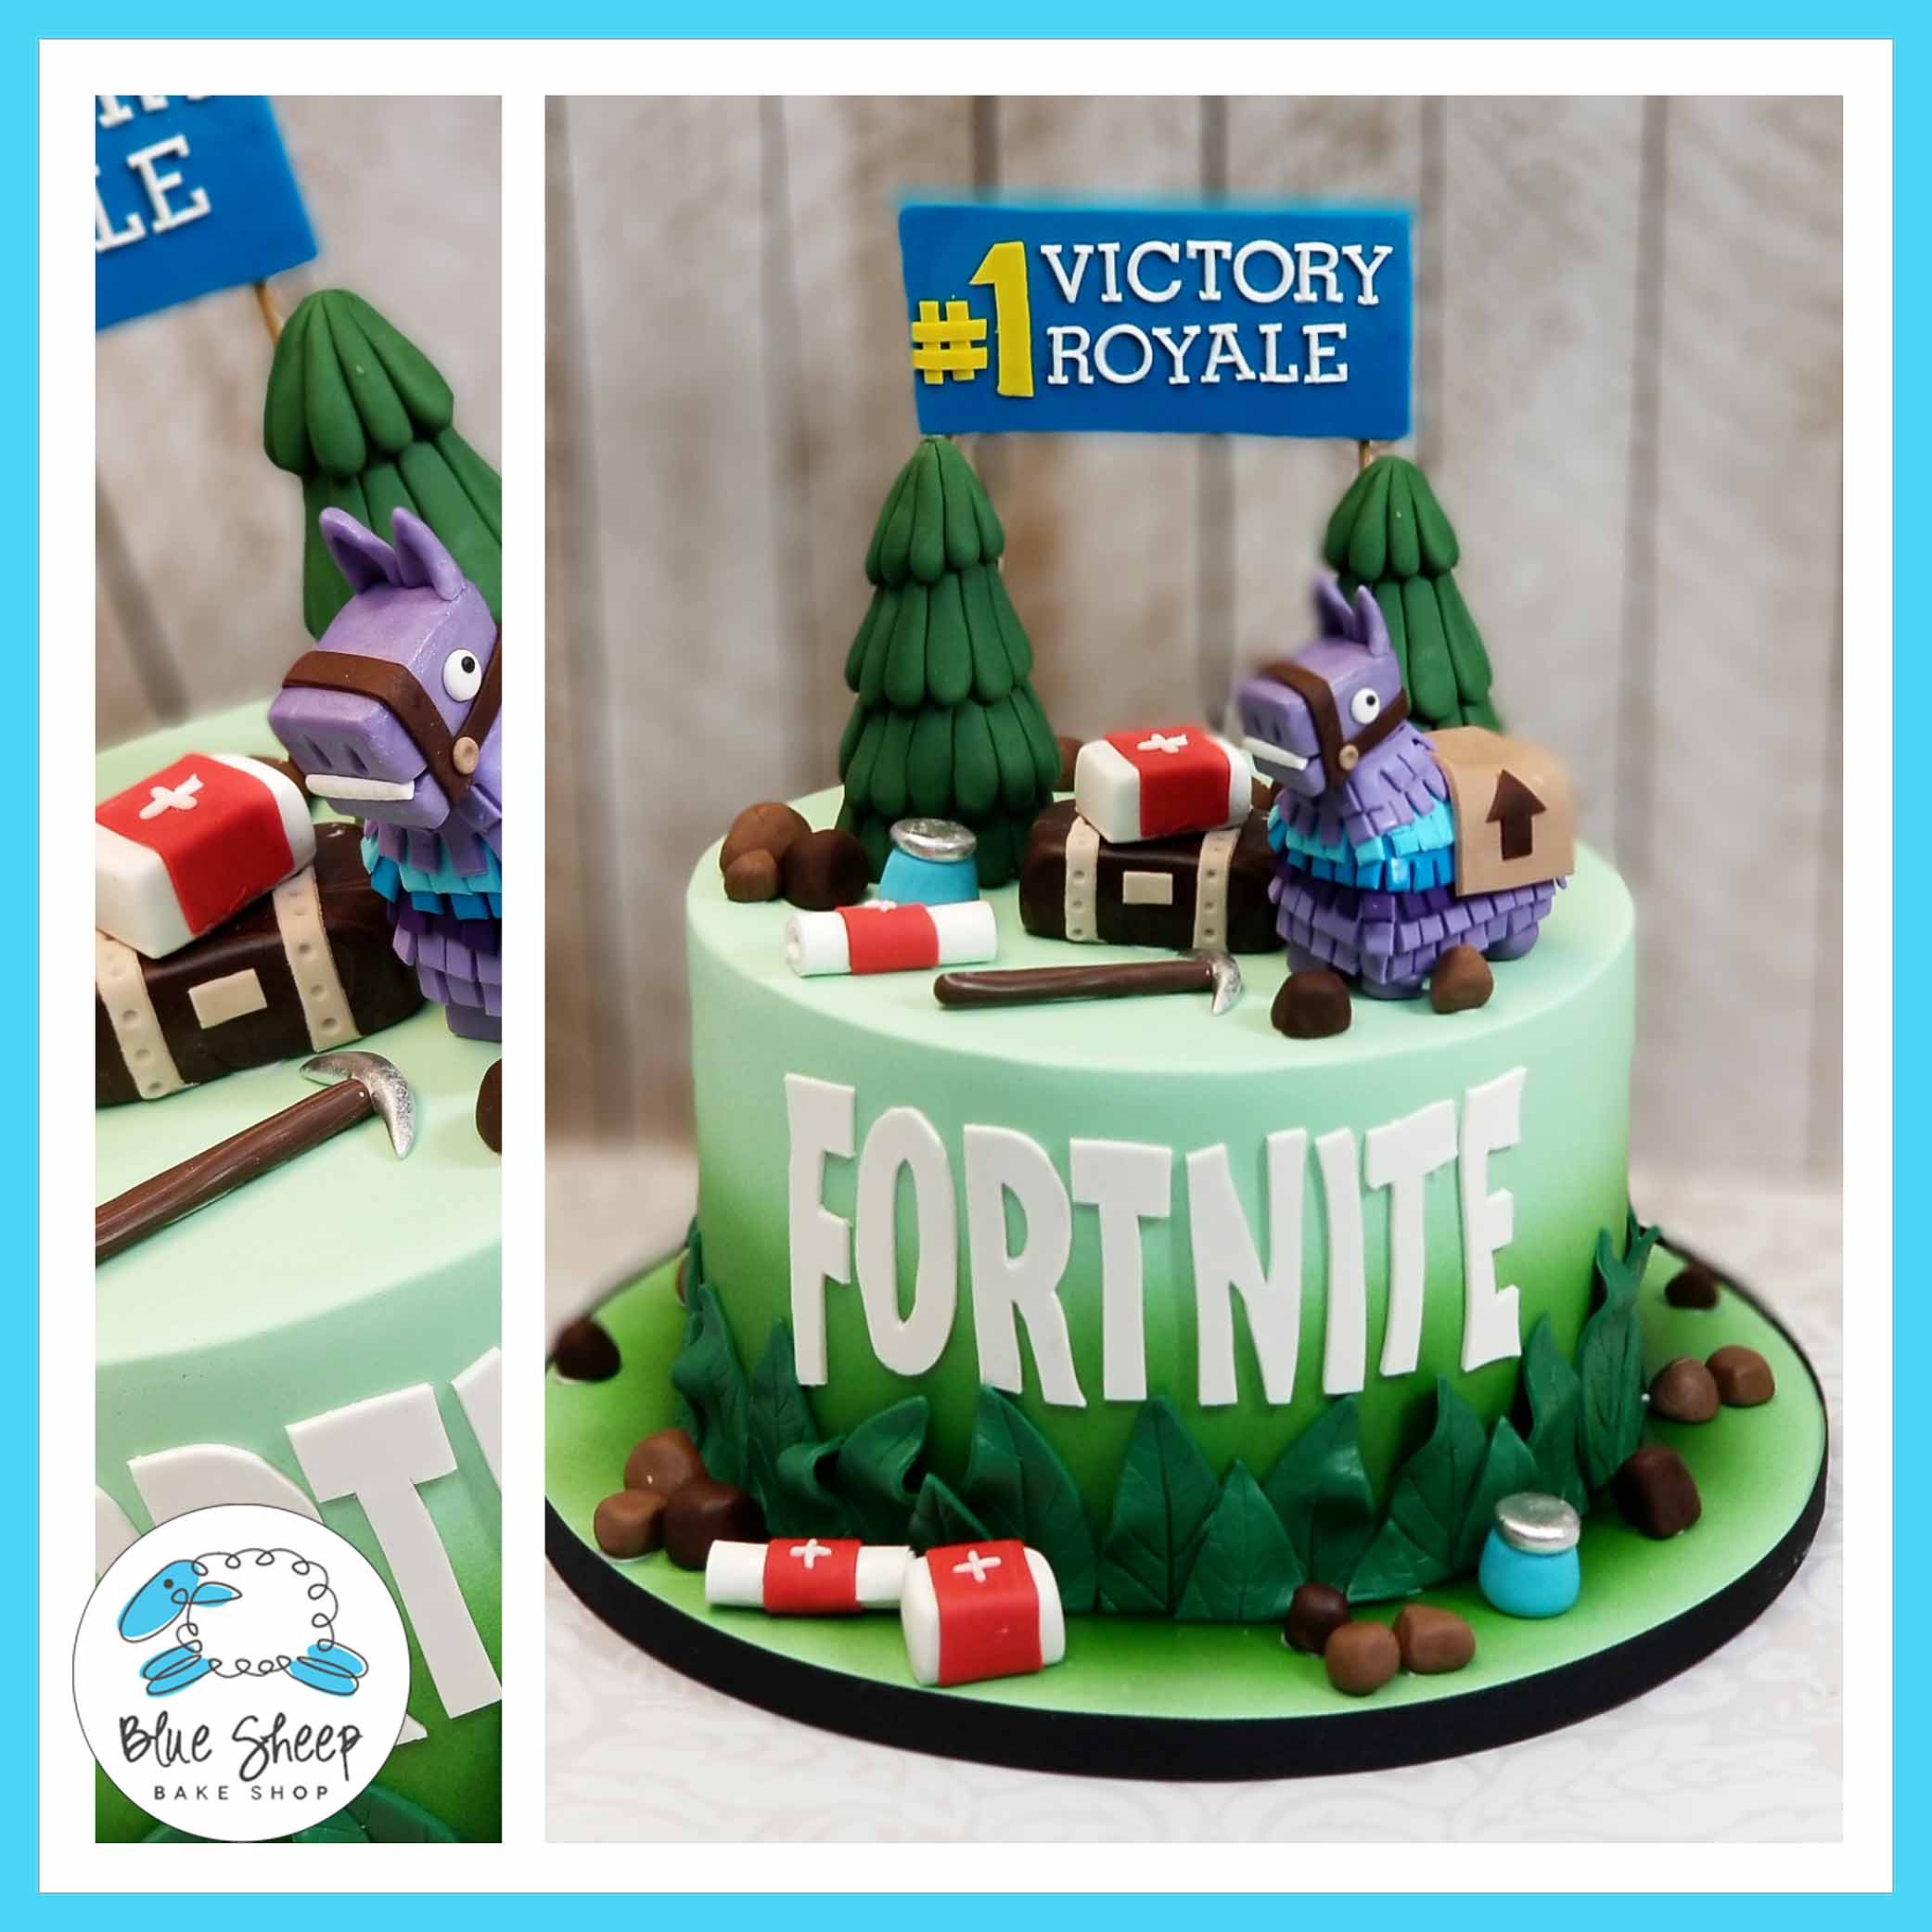 Fortnite Battle Royale Birthday Cake Blue Sheep Bake Shop - fortnite battle royal cake nj custom cakes blue sheep bake shop